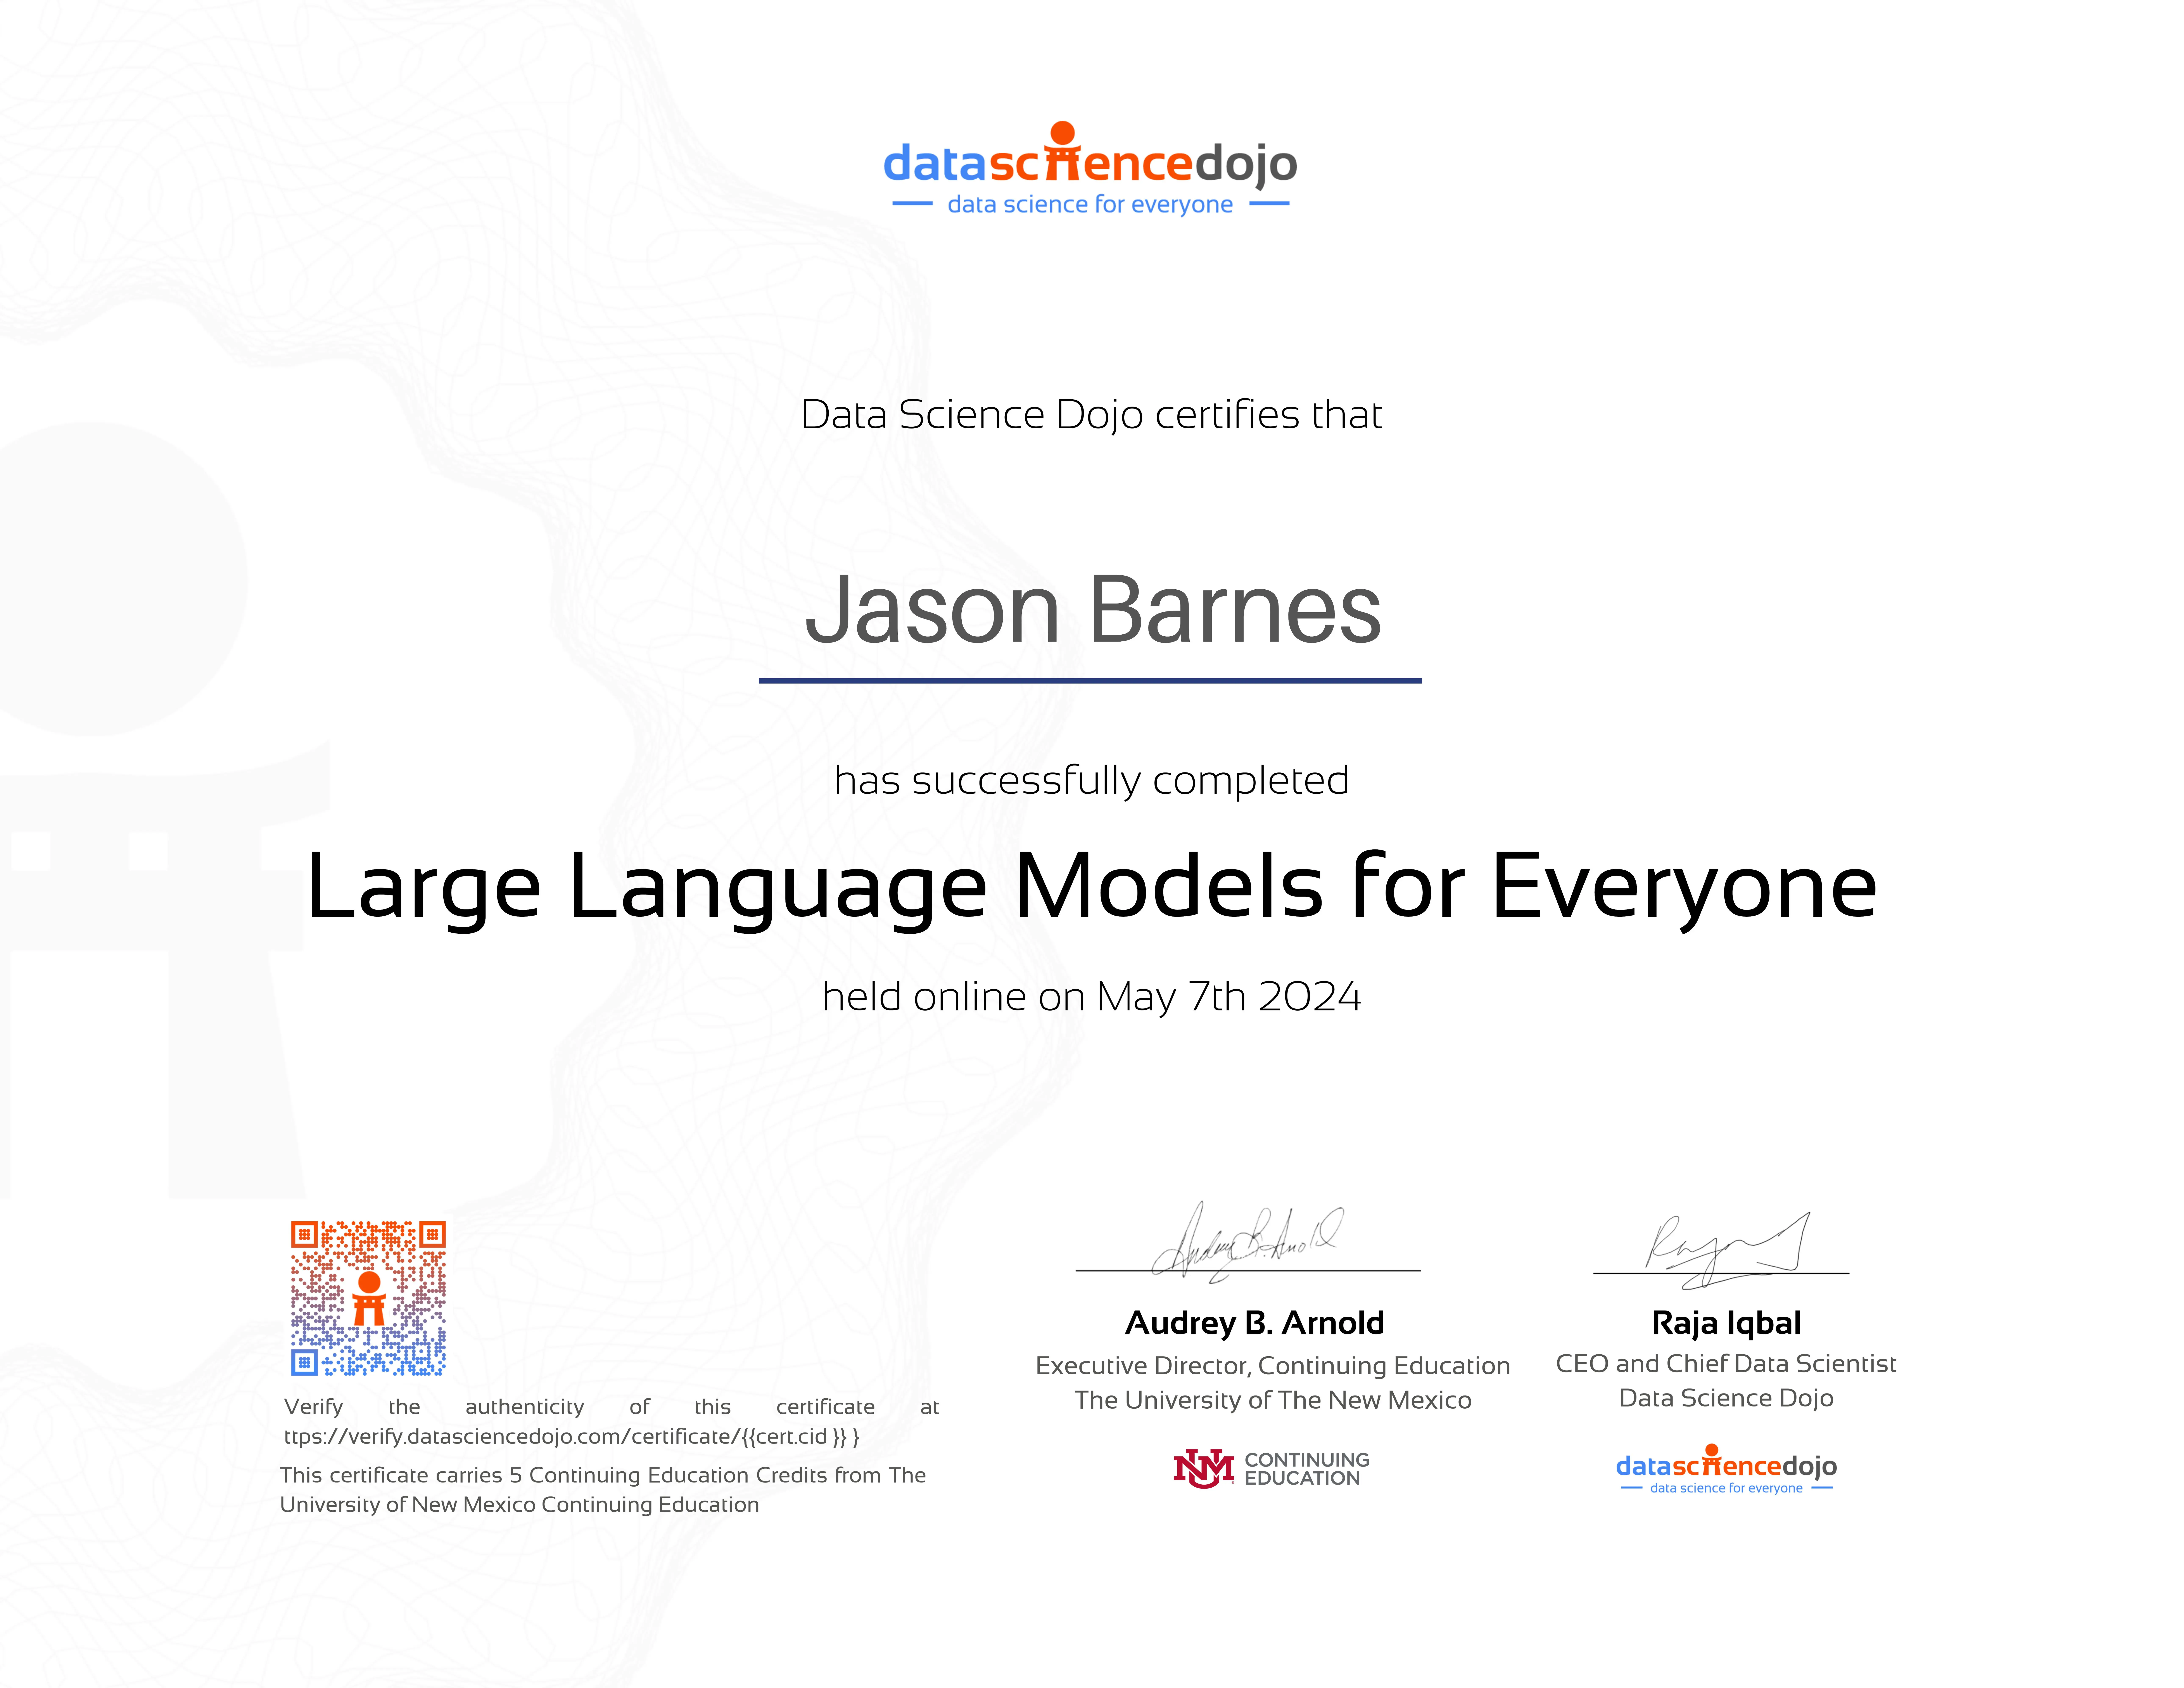 Large Language Models for Everyone | Data Science Dojo